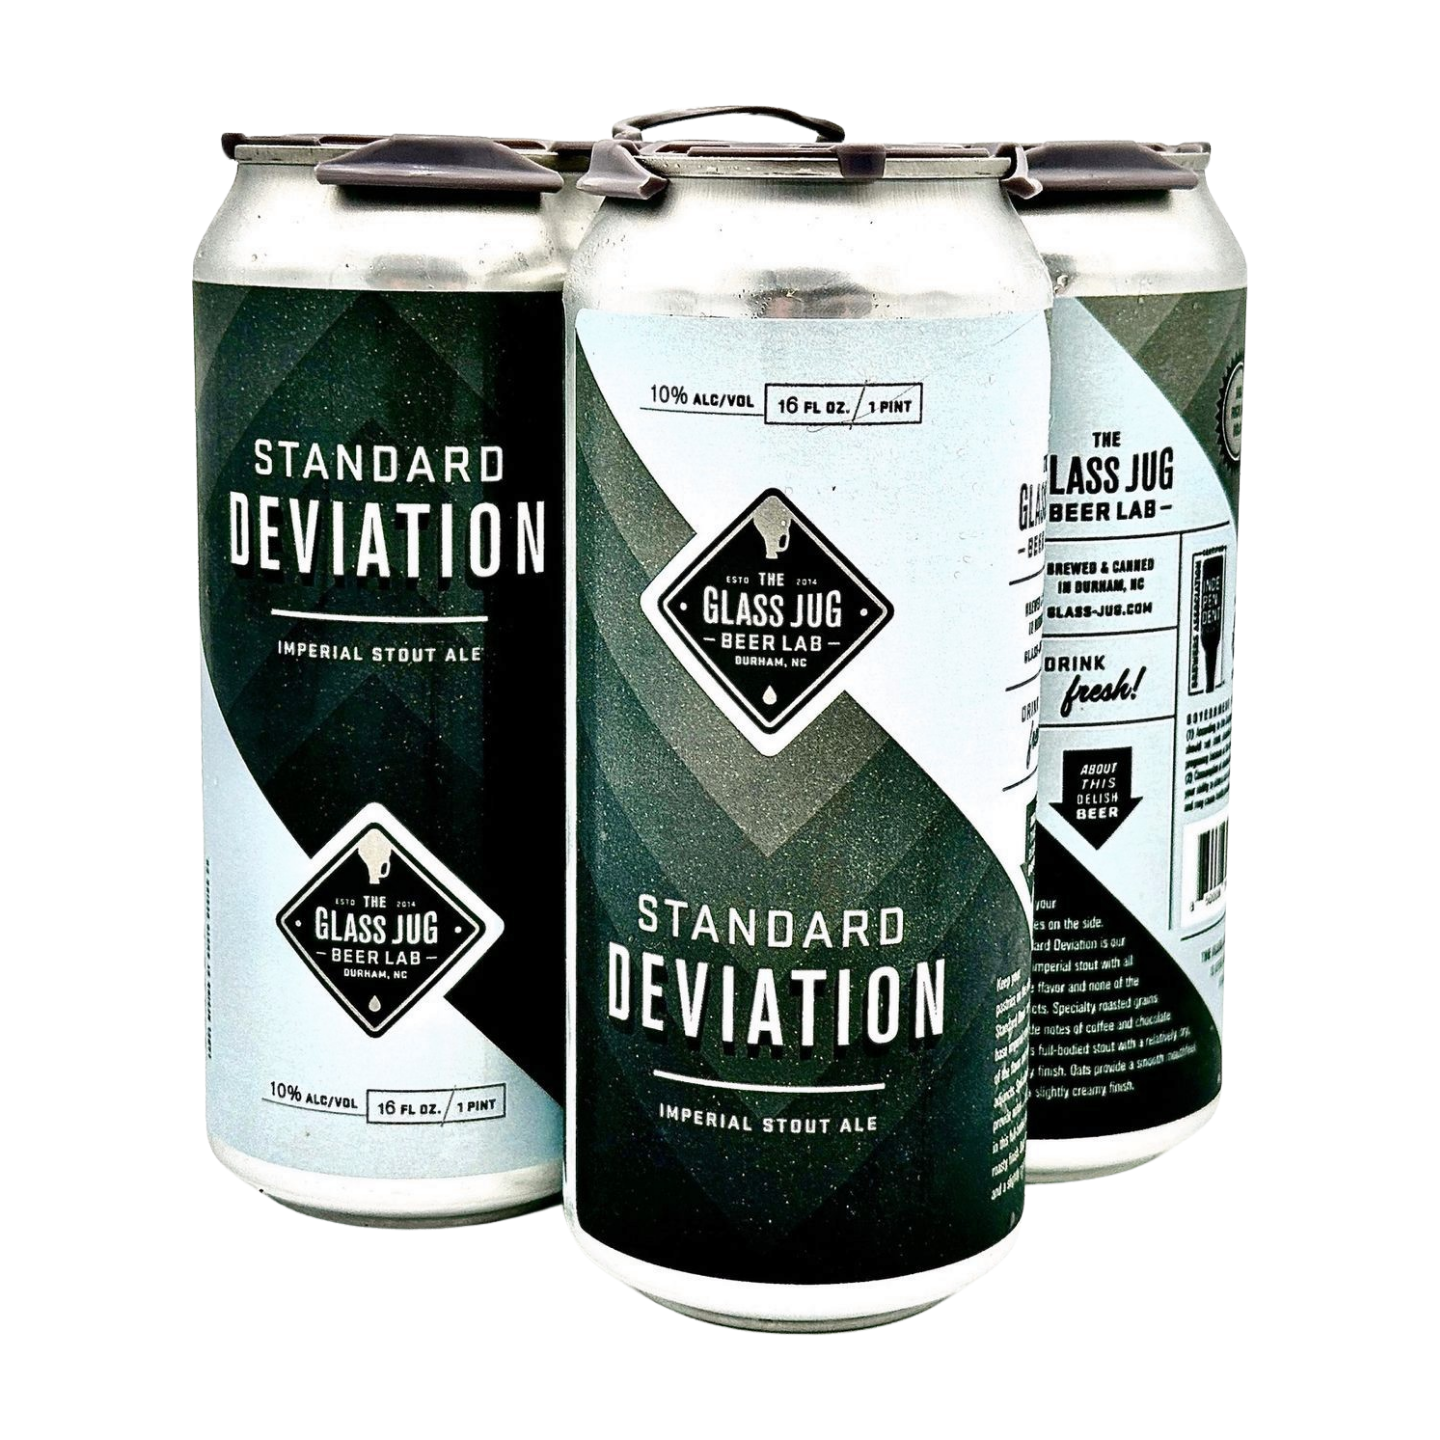 Standard Deviation, 16 oz cans, 4 pack